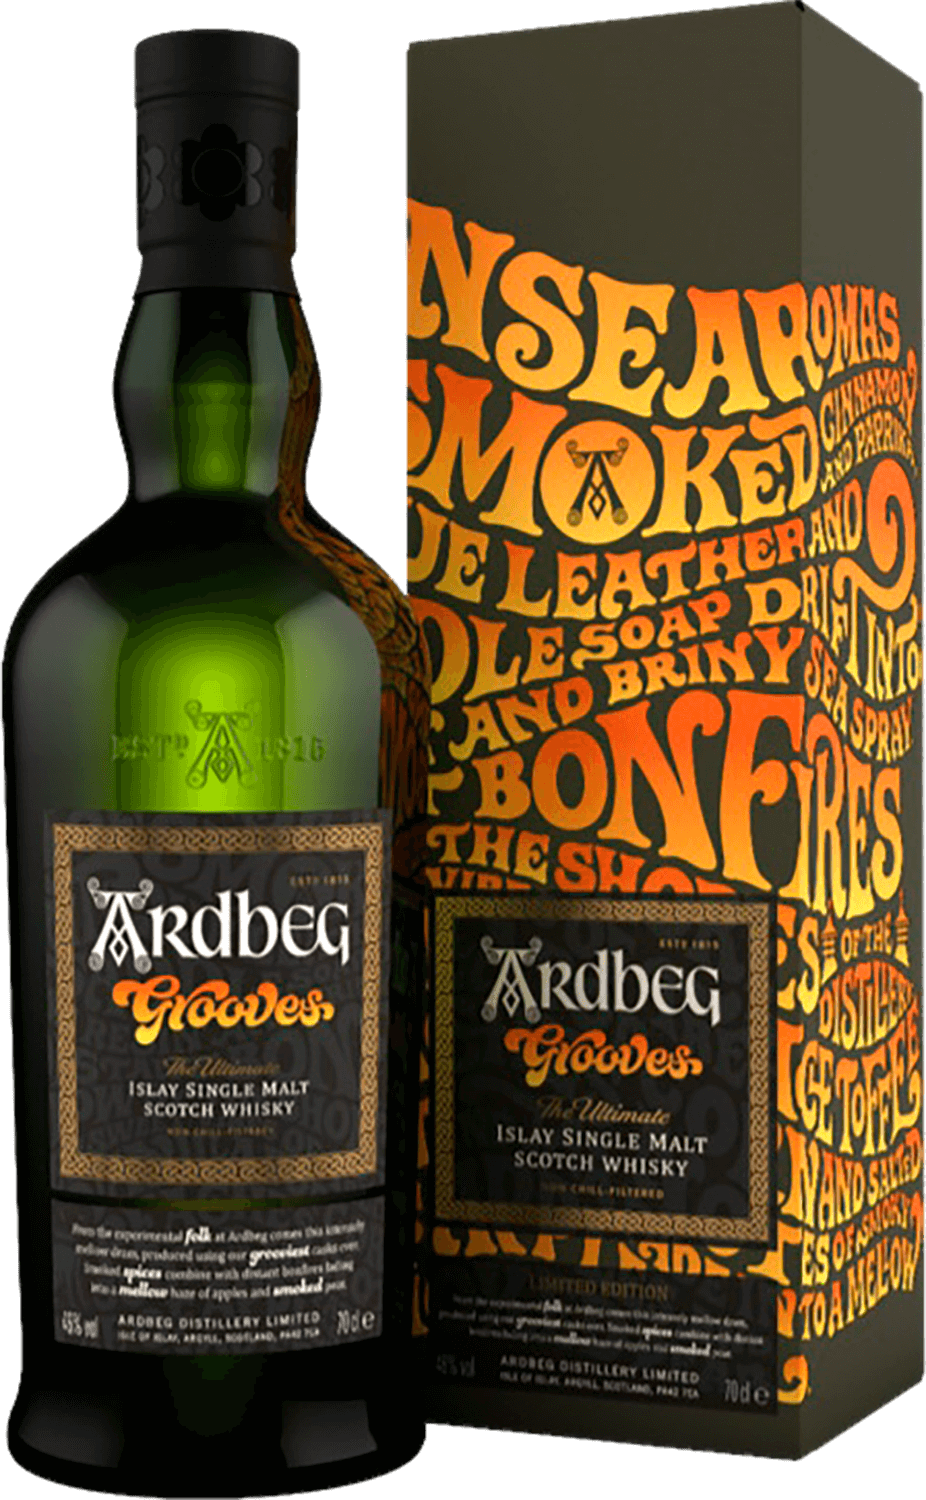 Ardbeg Grooves Islay Single Malt Scotch Whisky (gift box) bruichladdich octomore 10 years islay single malt scotch whisky gift box